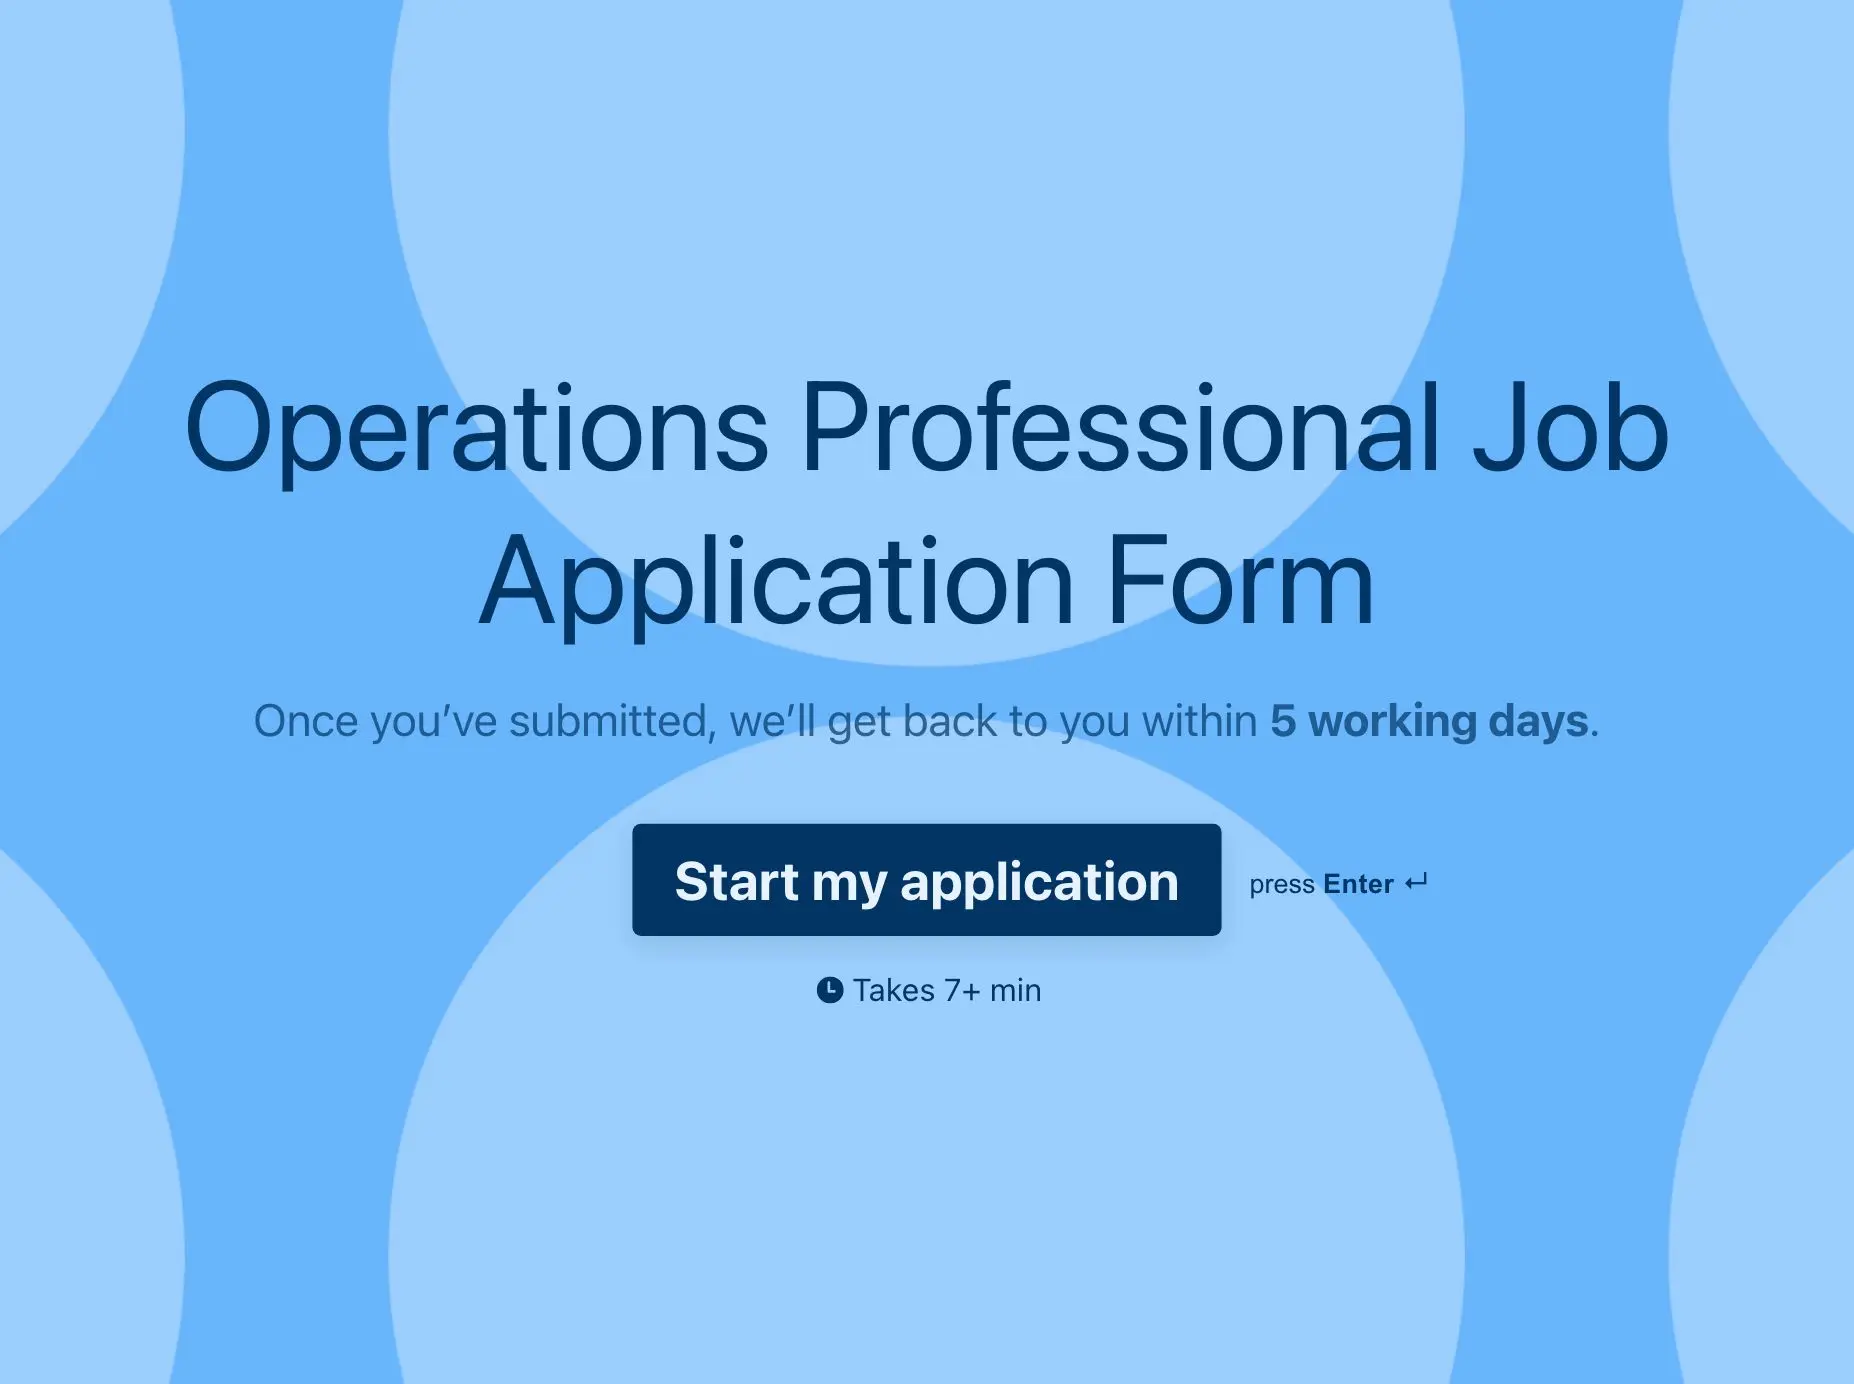 Operations Professional Job Application Form Template Hero